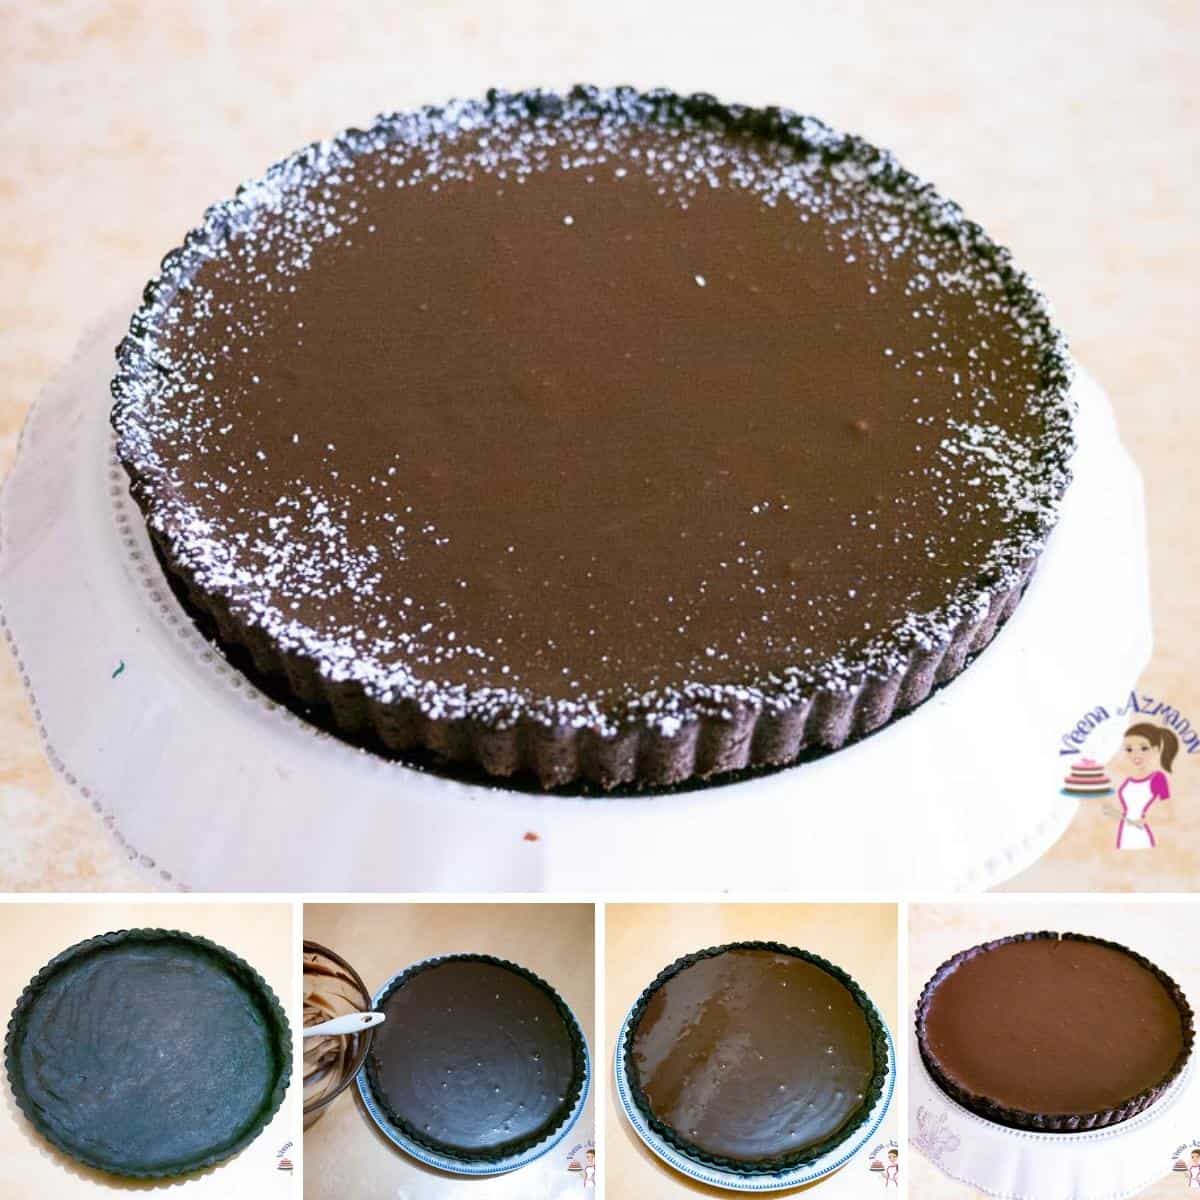 Progress pictures making the dark chocolate ganache tart.